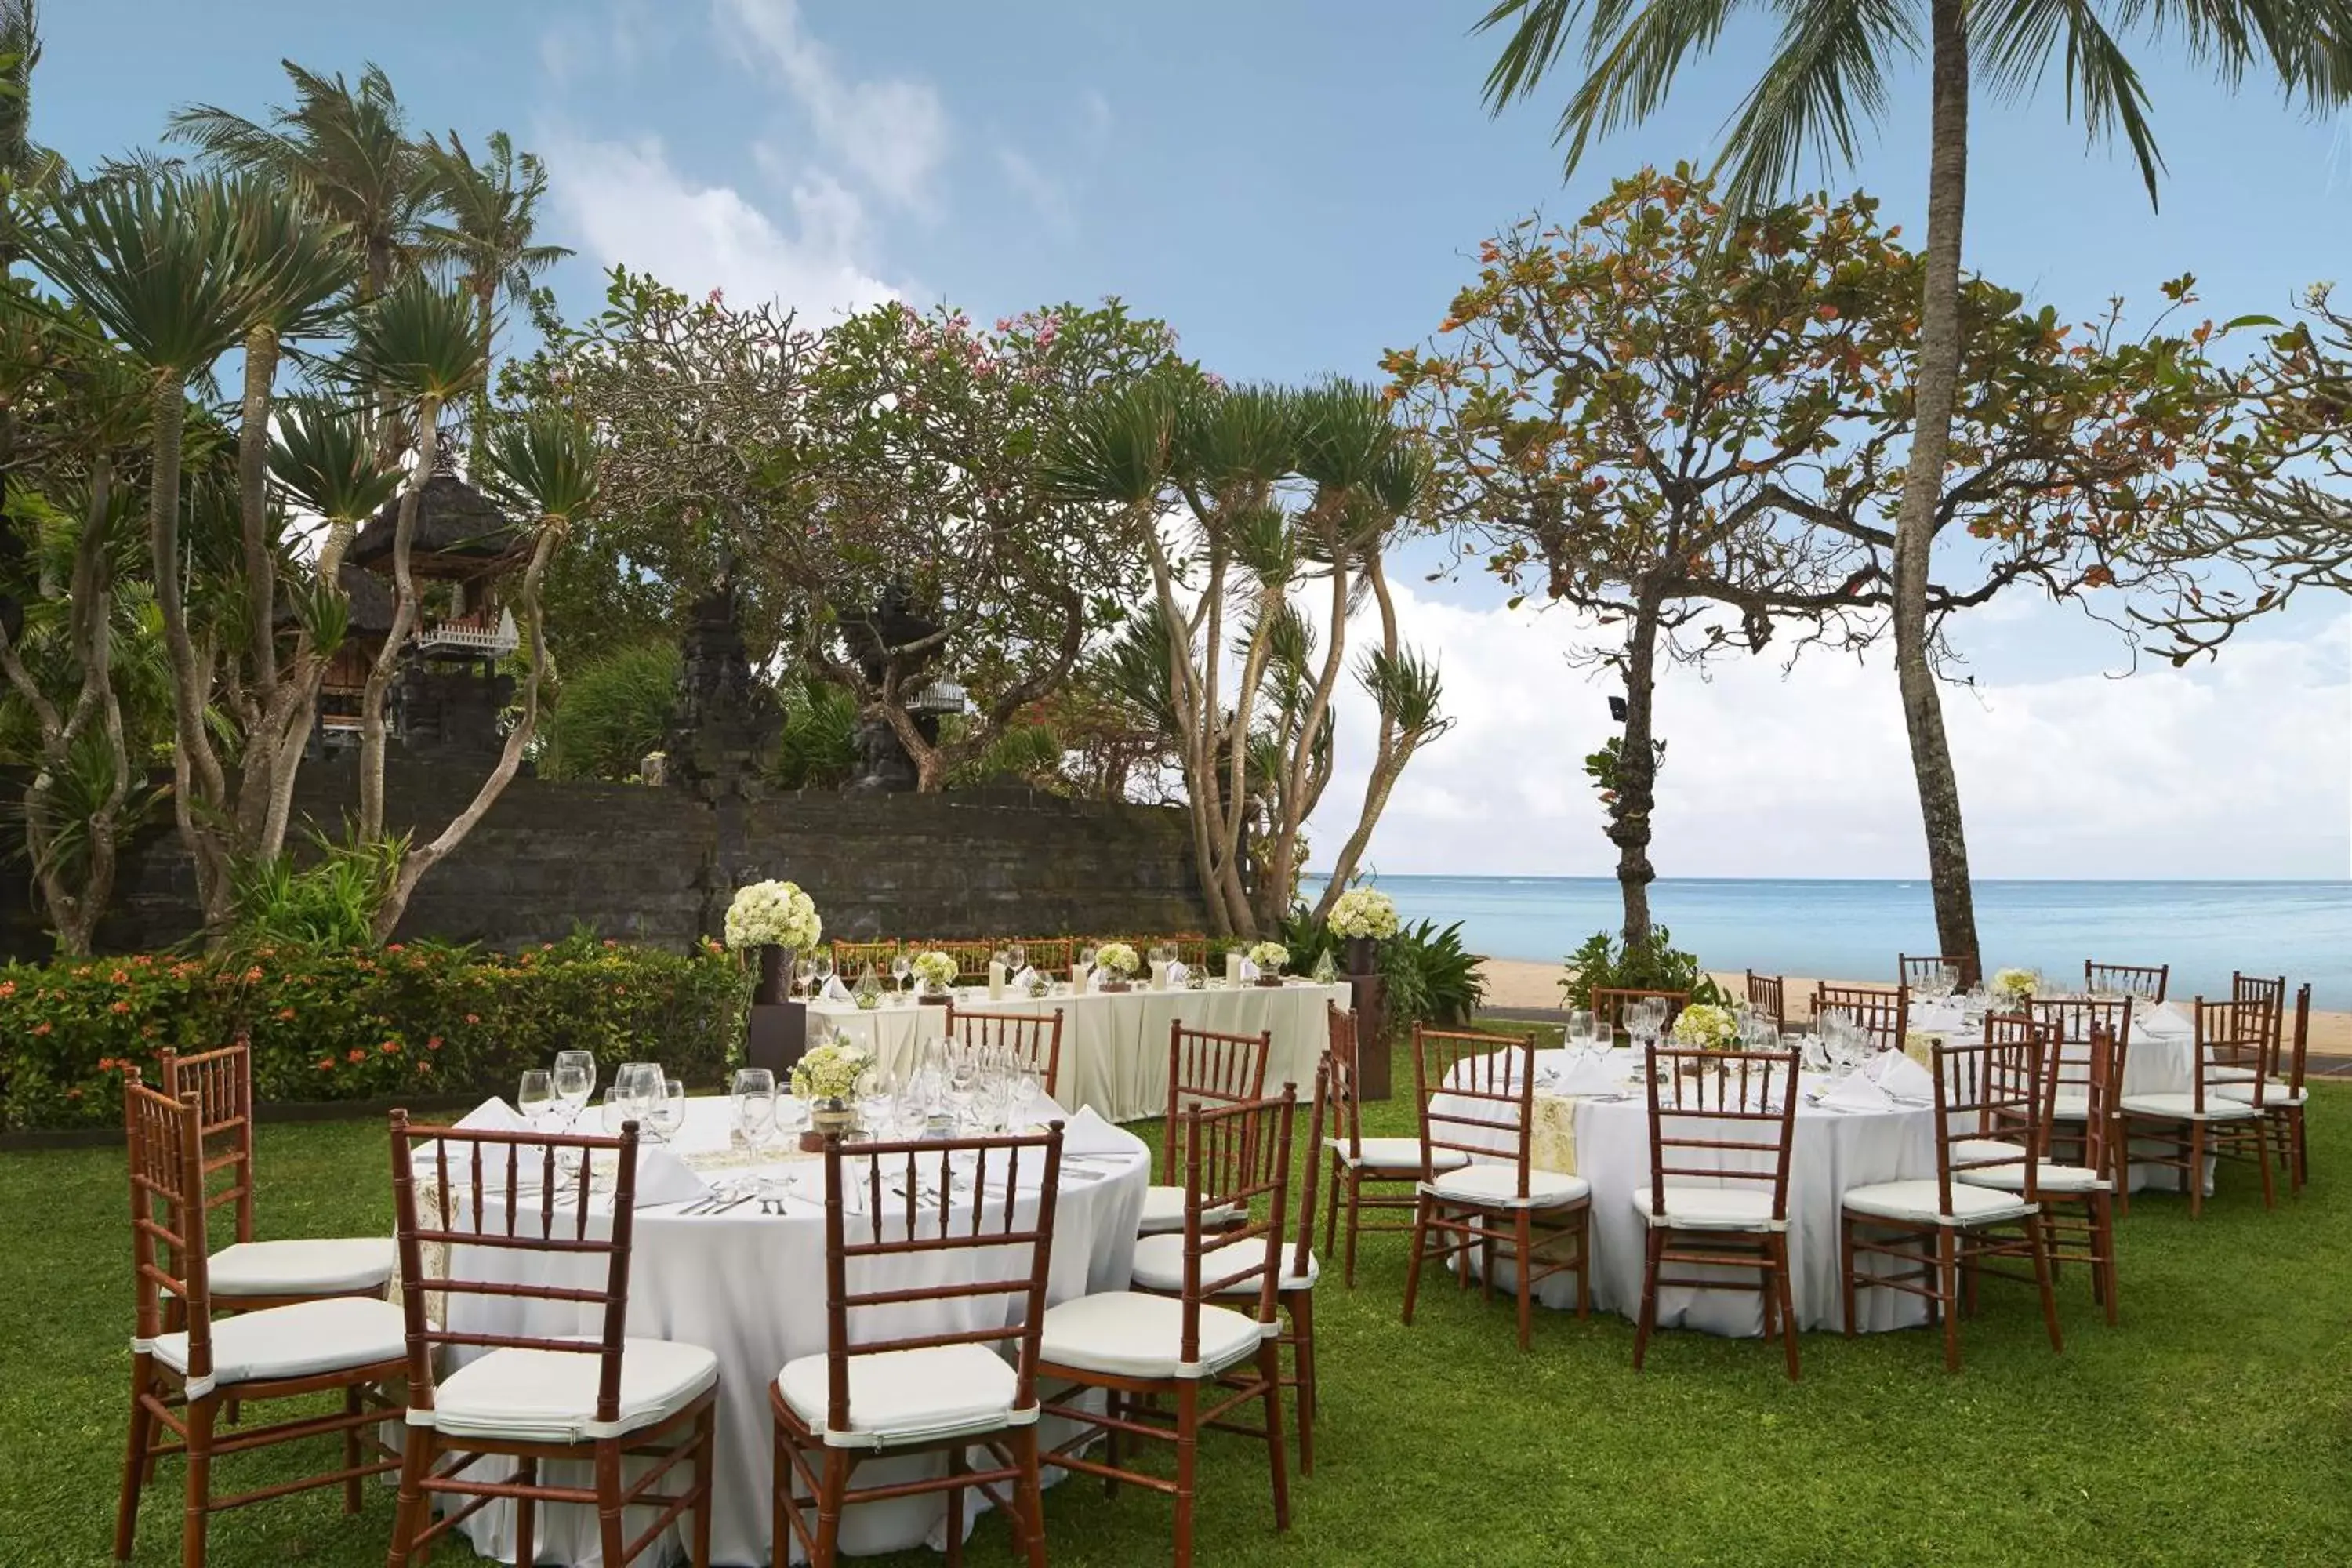 Banquet/Function facilities, Banquet Facilities in The Westin Resort Nusa Dua, Bali